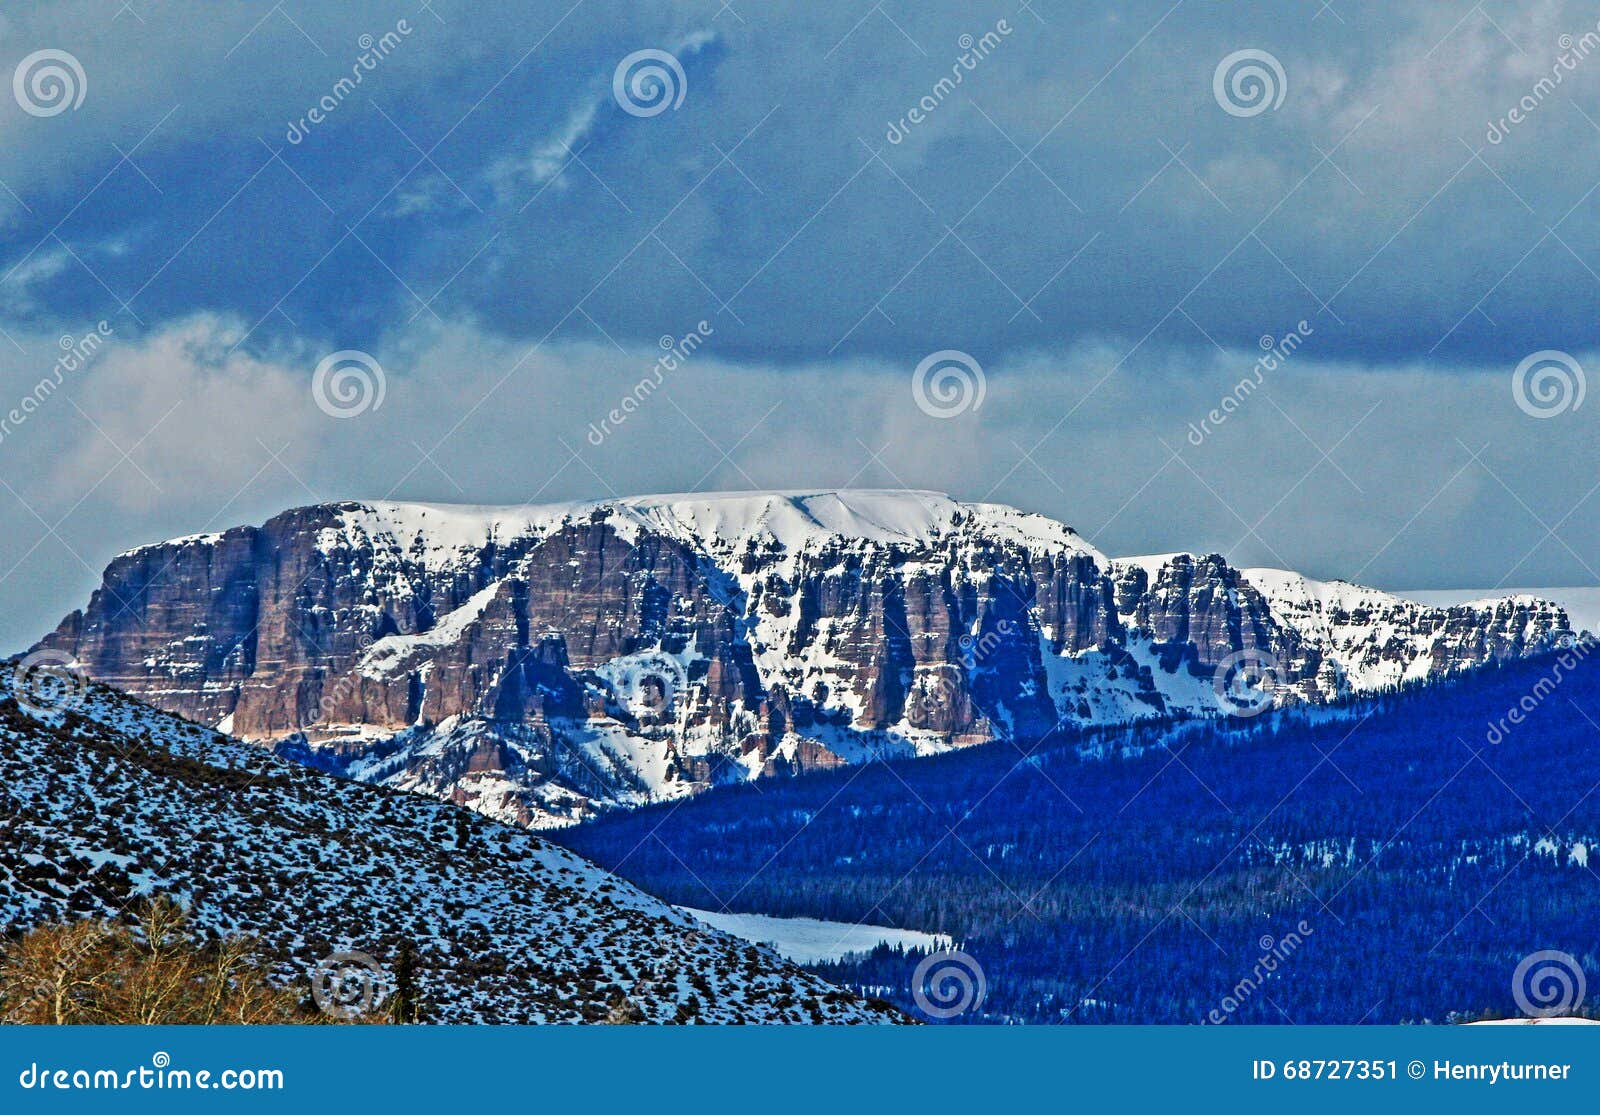 togwotee pass absaroka mountains seen from dubois wyoming